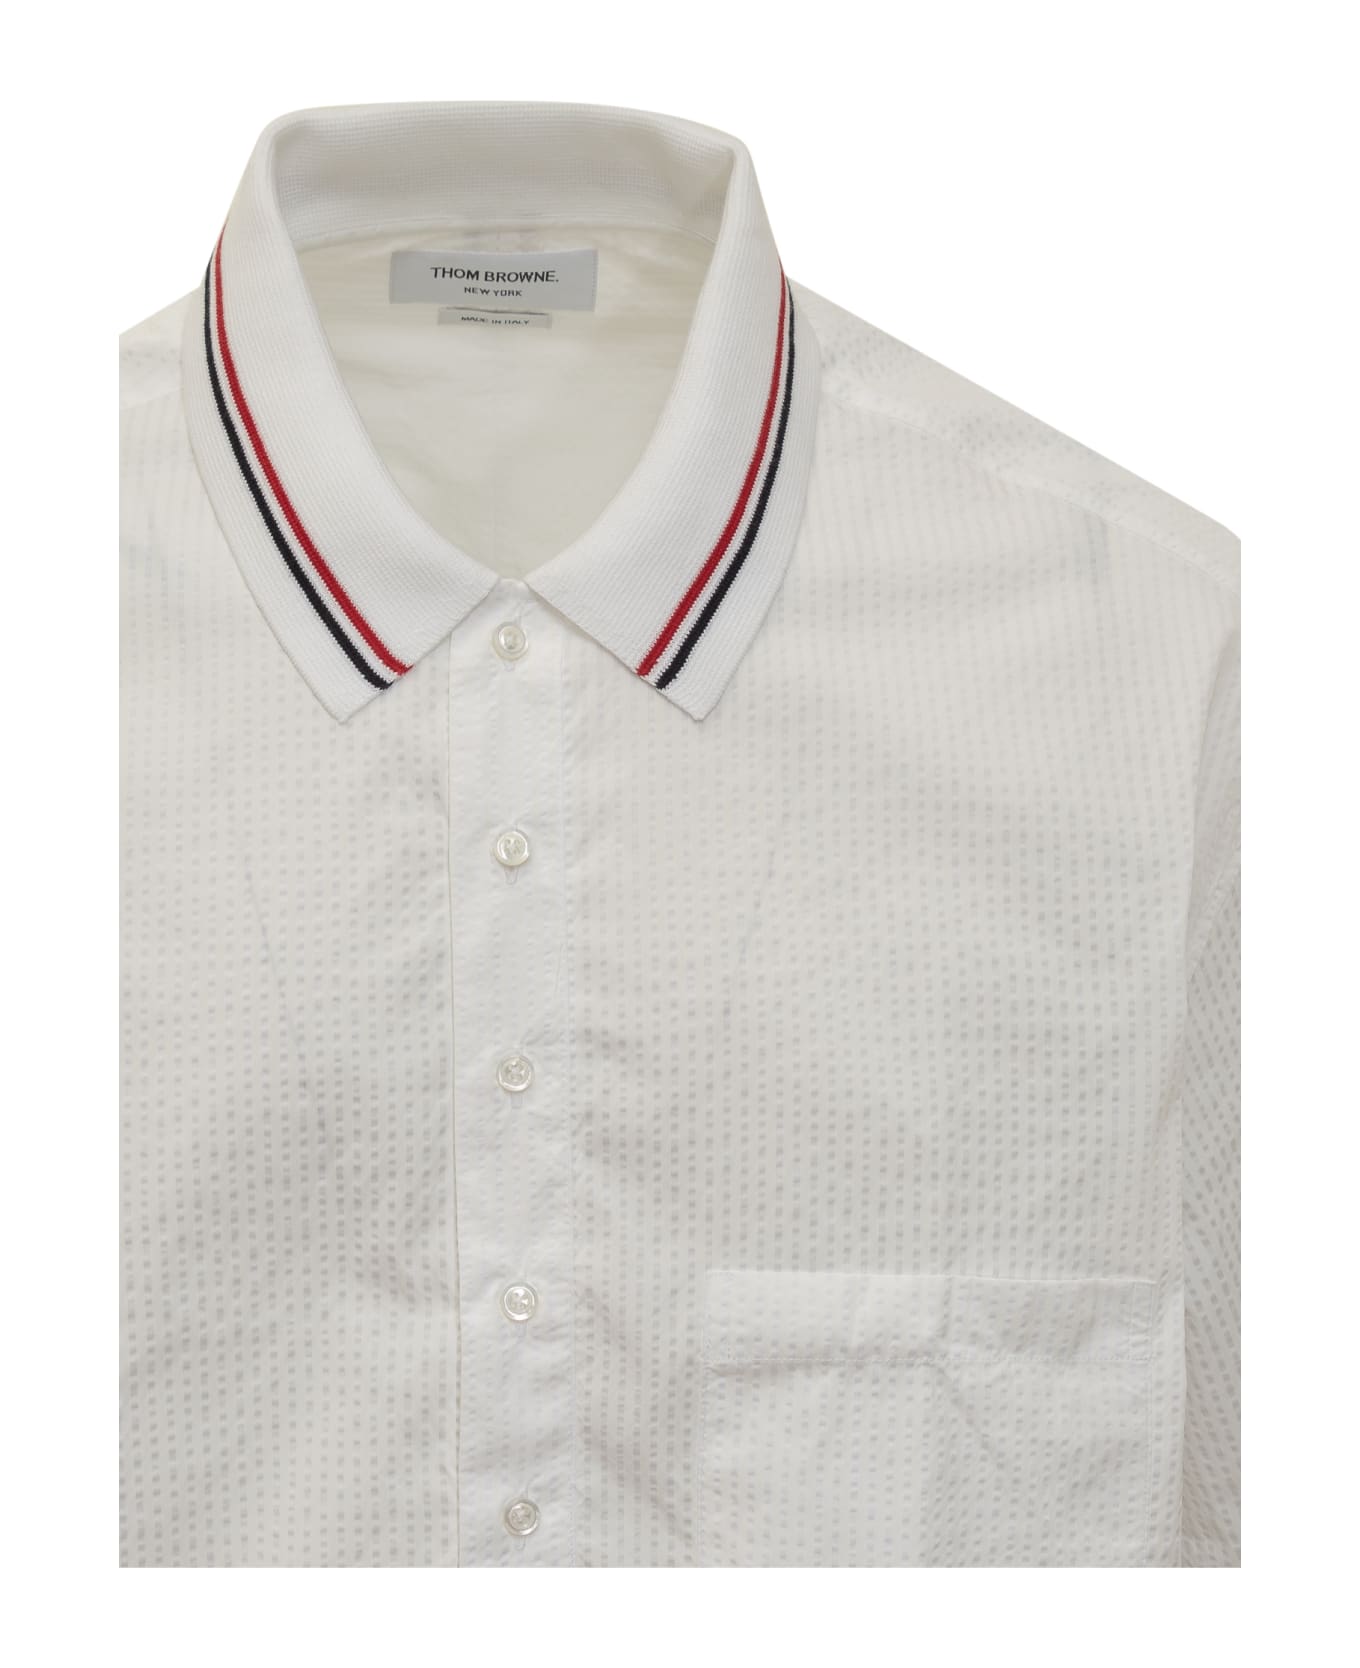 Thom Browne Rugby Shirt - WHITE